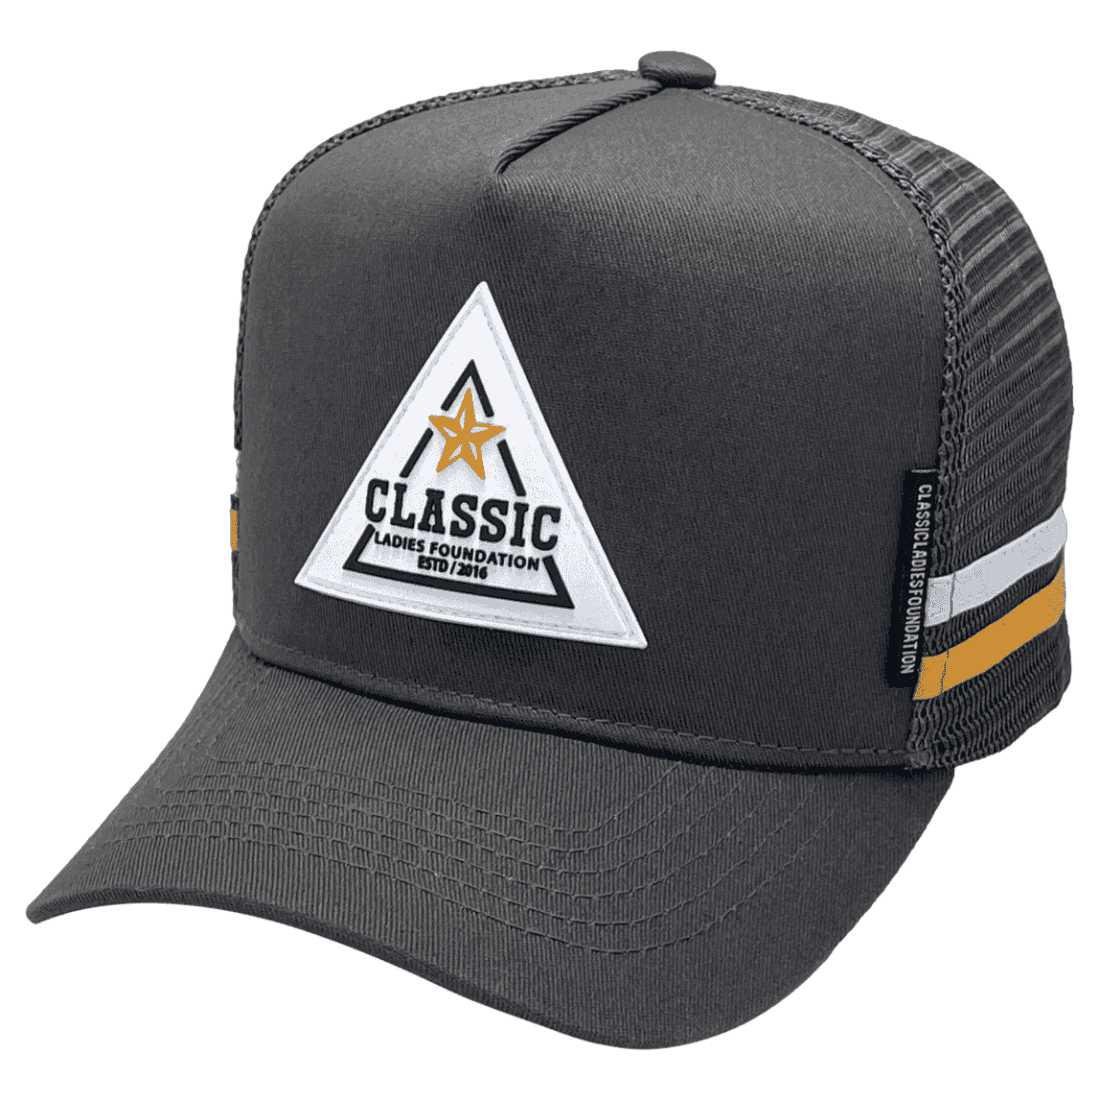 Classic Ladies Foundation HP Midrange Aussie Trucker Hat Charcoal/White/Orange Cotton Mens